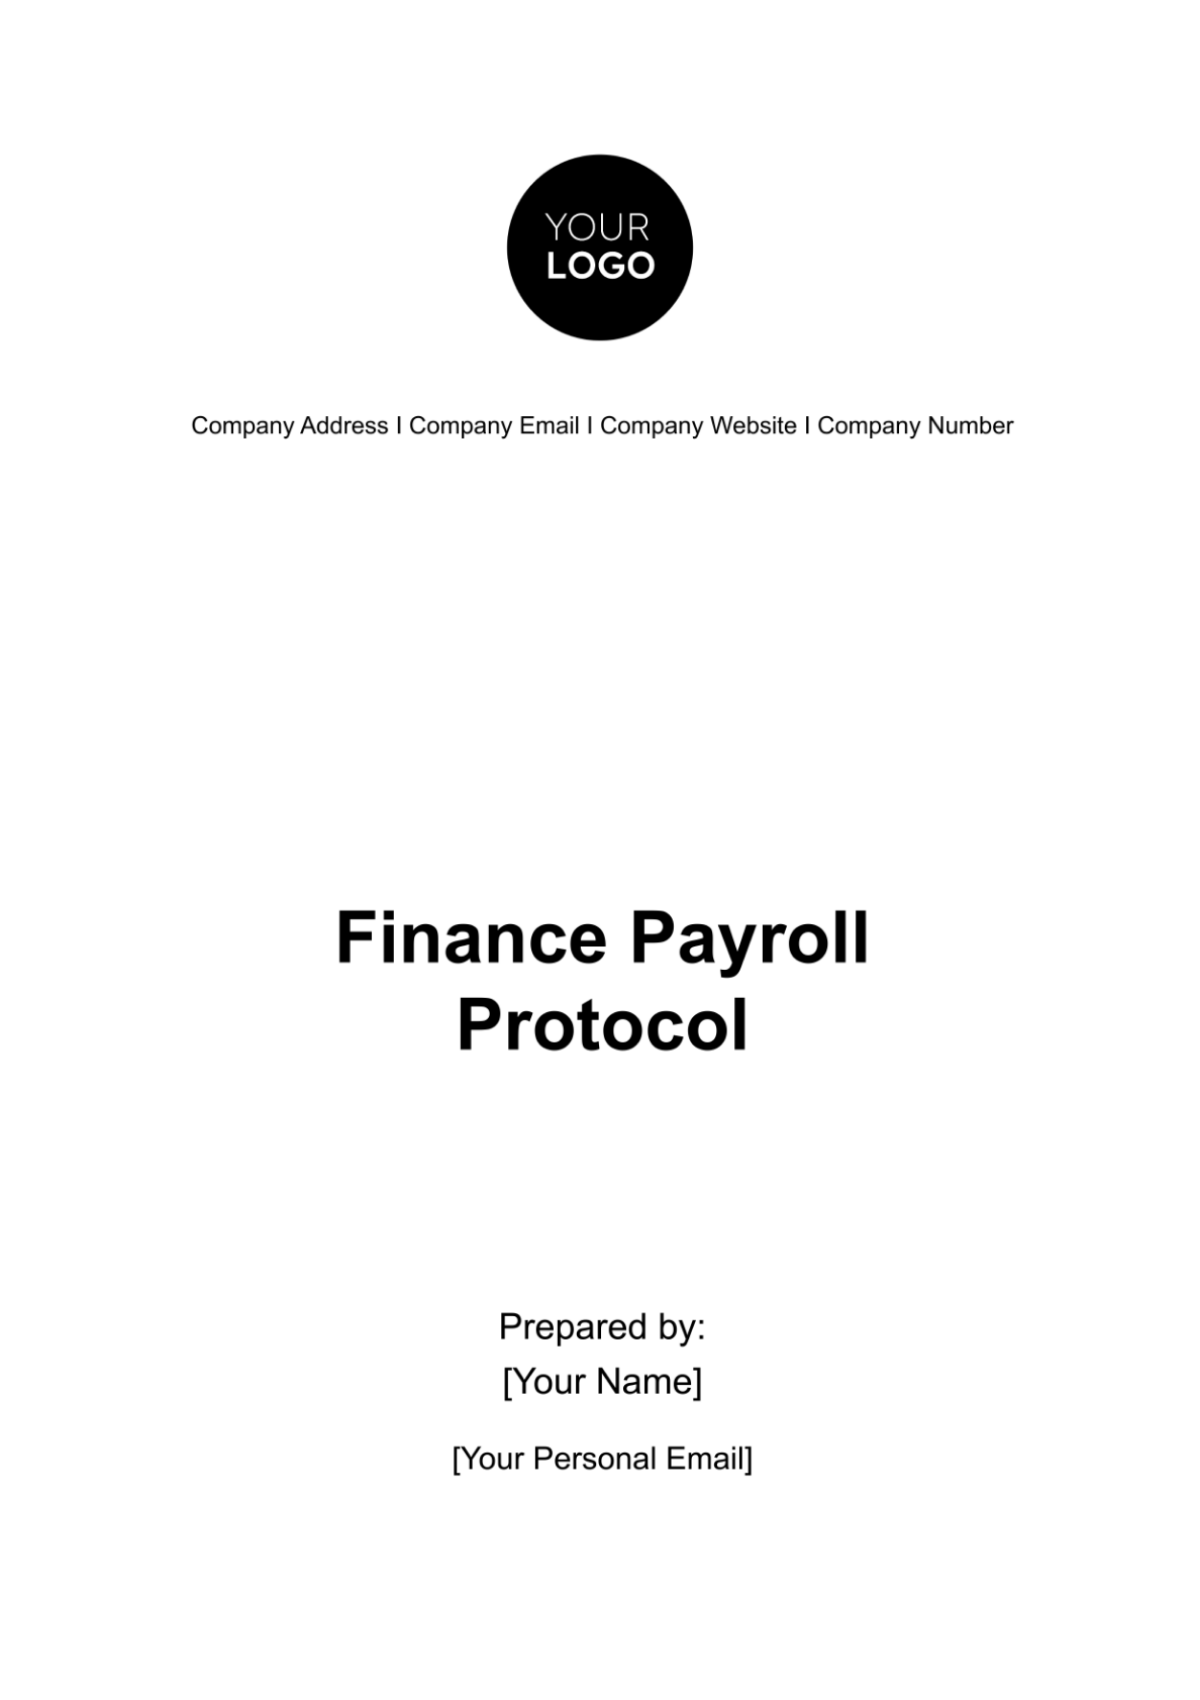 Free Finance Payroll Protocol Template